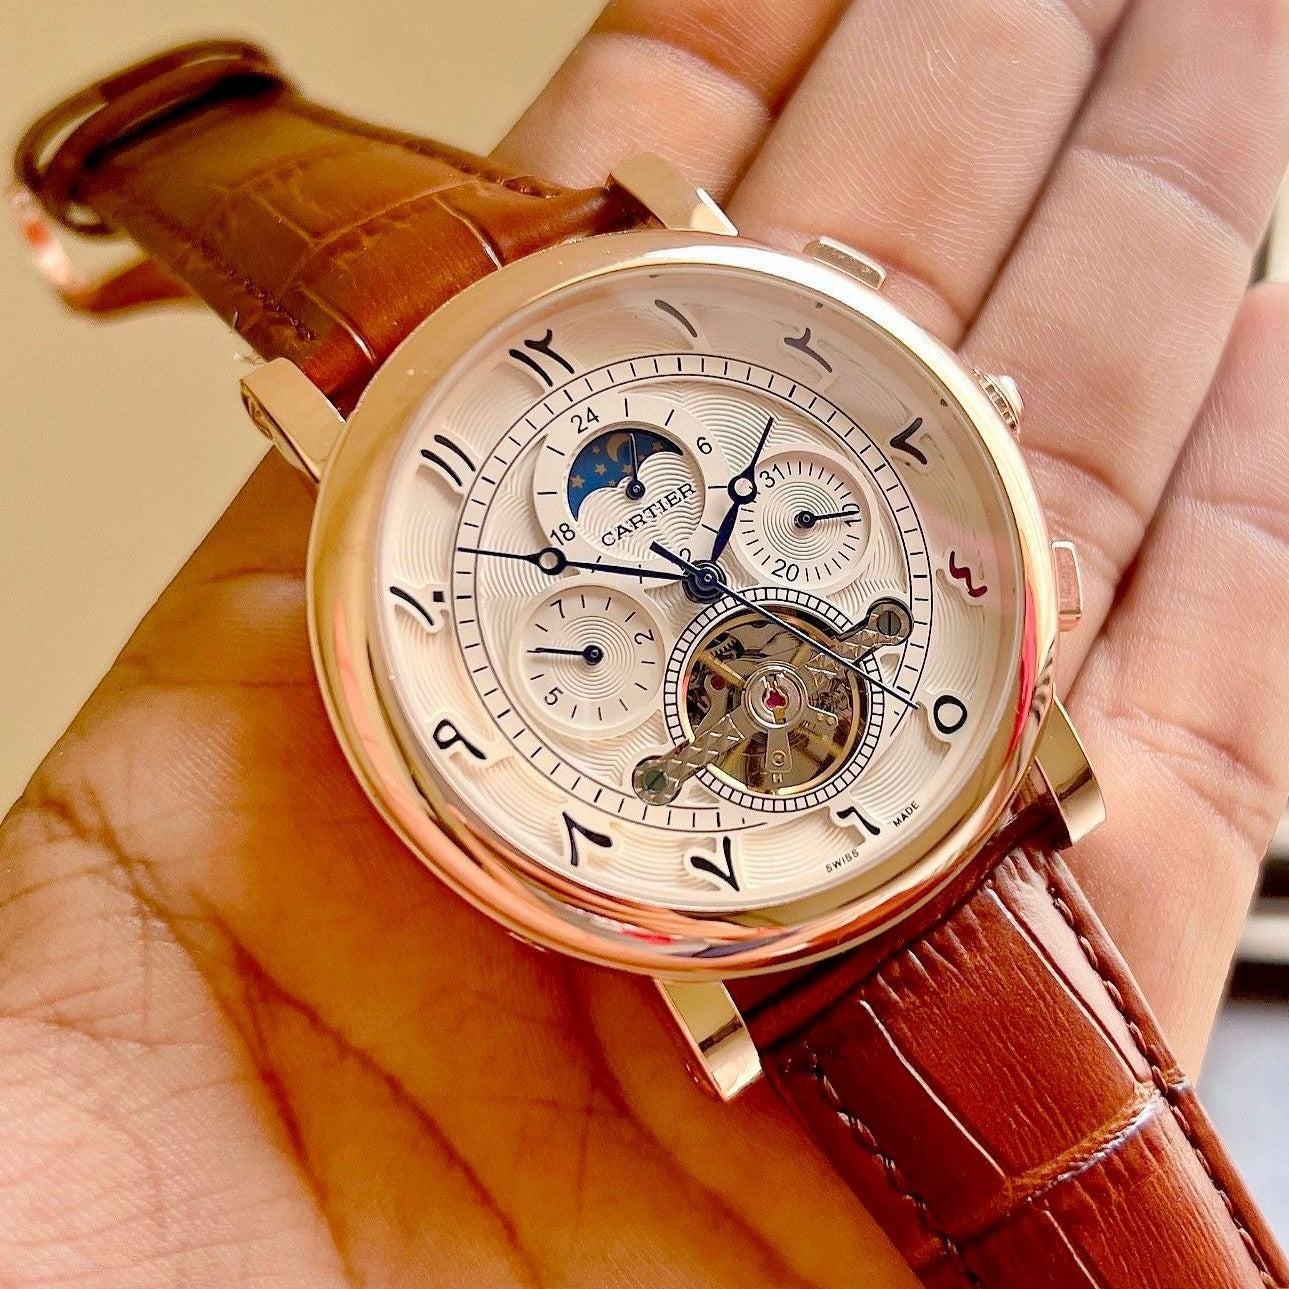 Premium Quality Ctr Luxury Watch - AmazingBaba